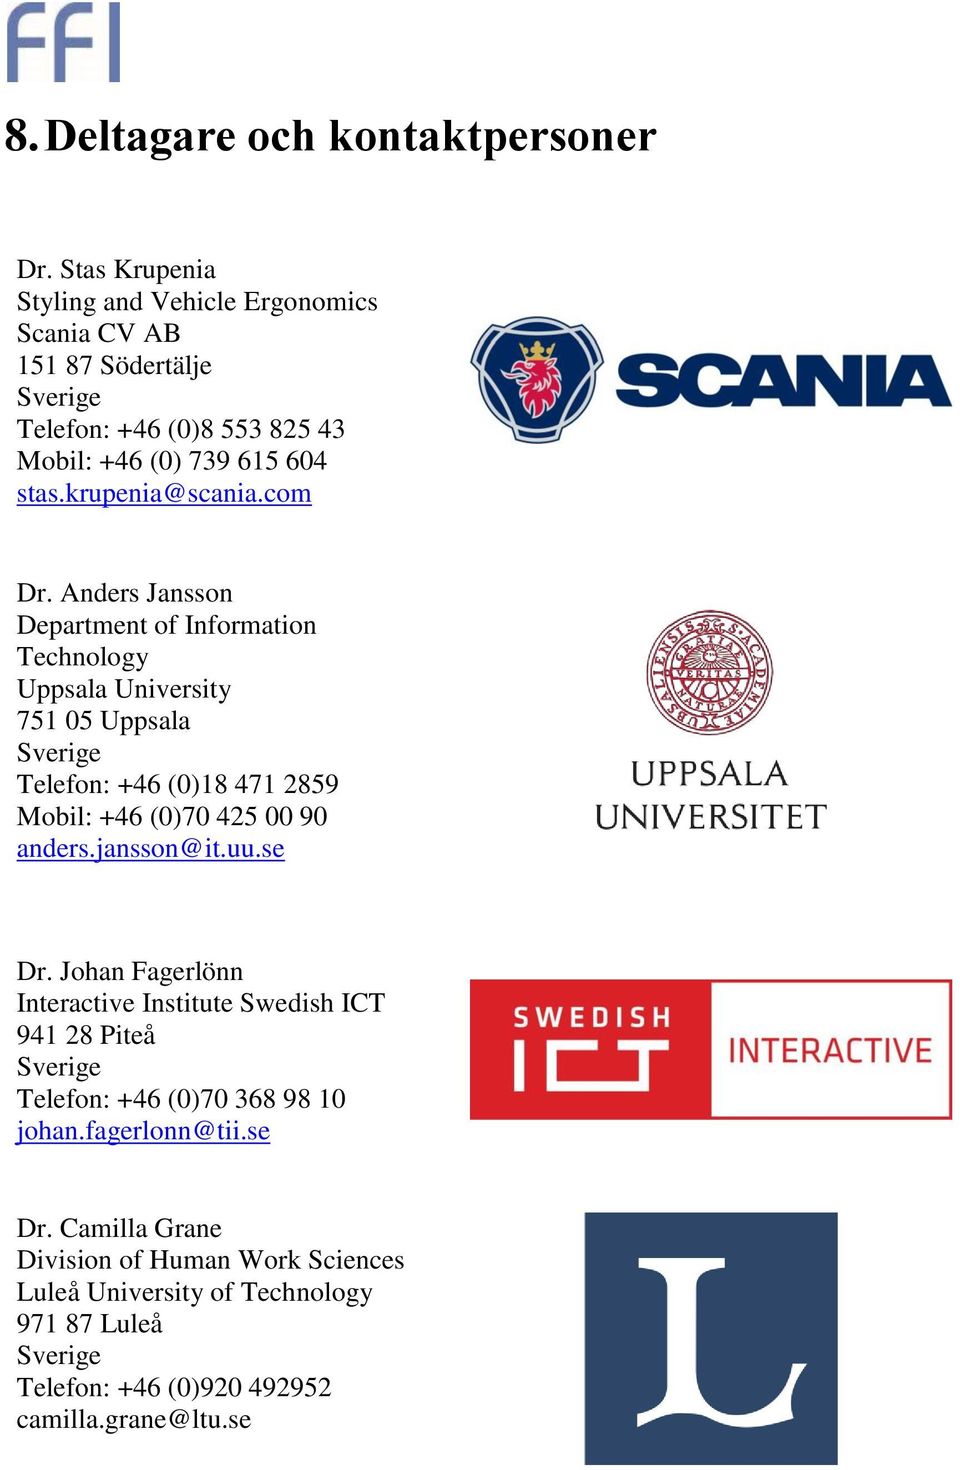 com Dr. Anders Jansson Department of Information Technology Uppsala University 751 05 Uppsala Sverige Telefon: +46 (0)18 471 2859 Mobil: +46 (0)70 425 00 90 anders.